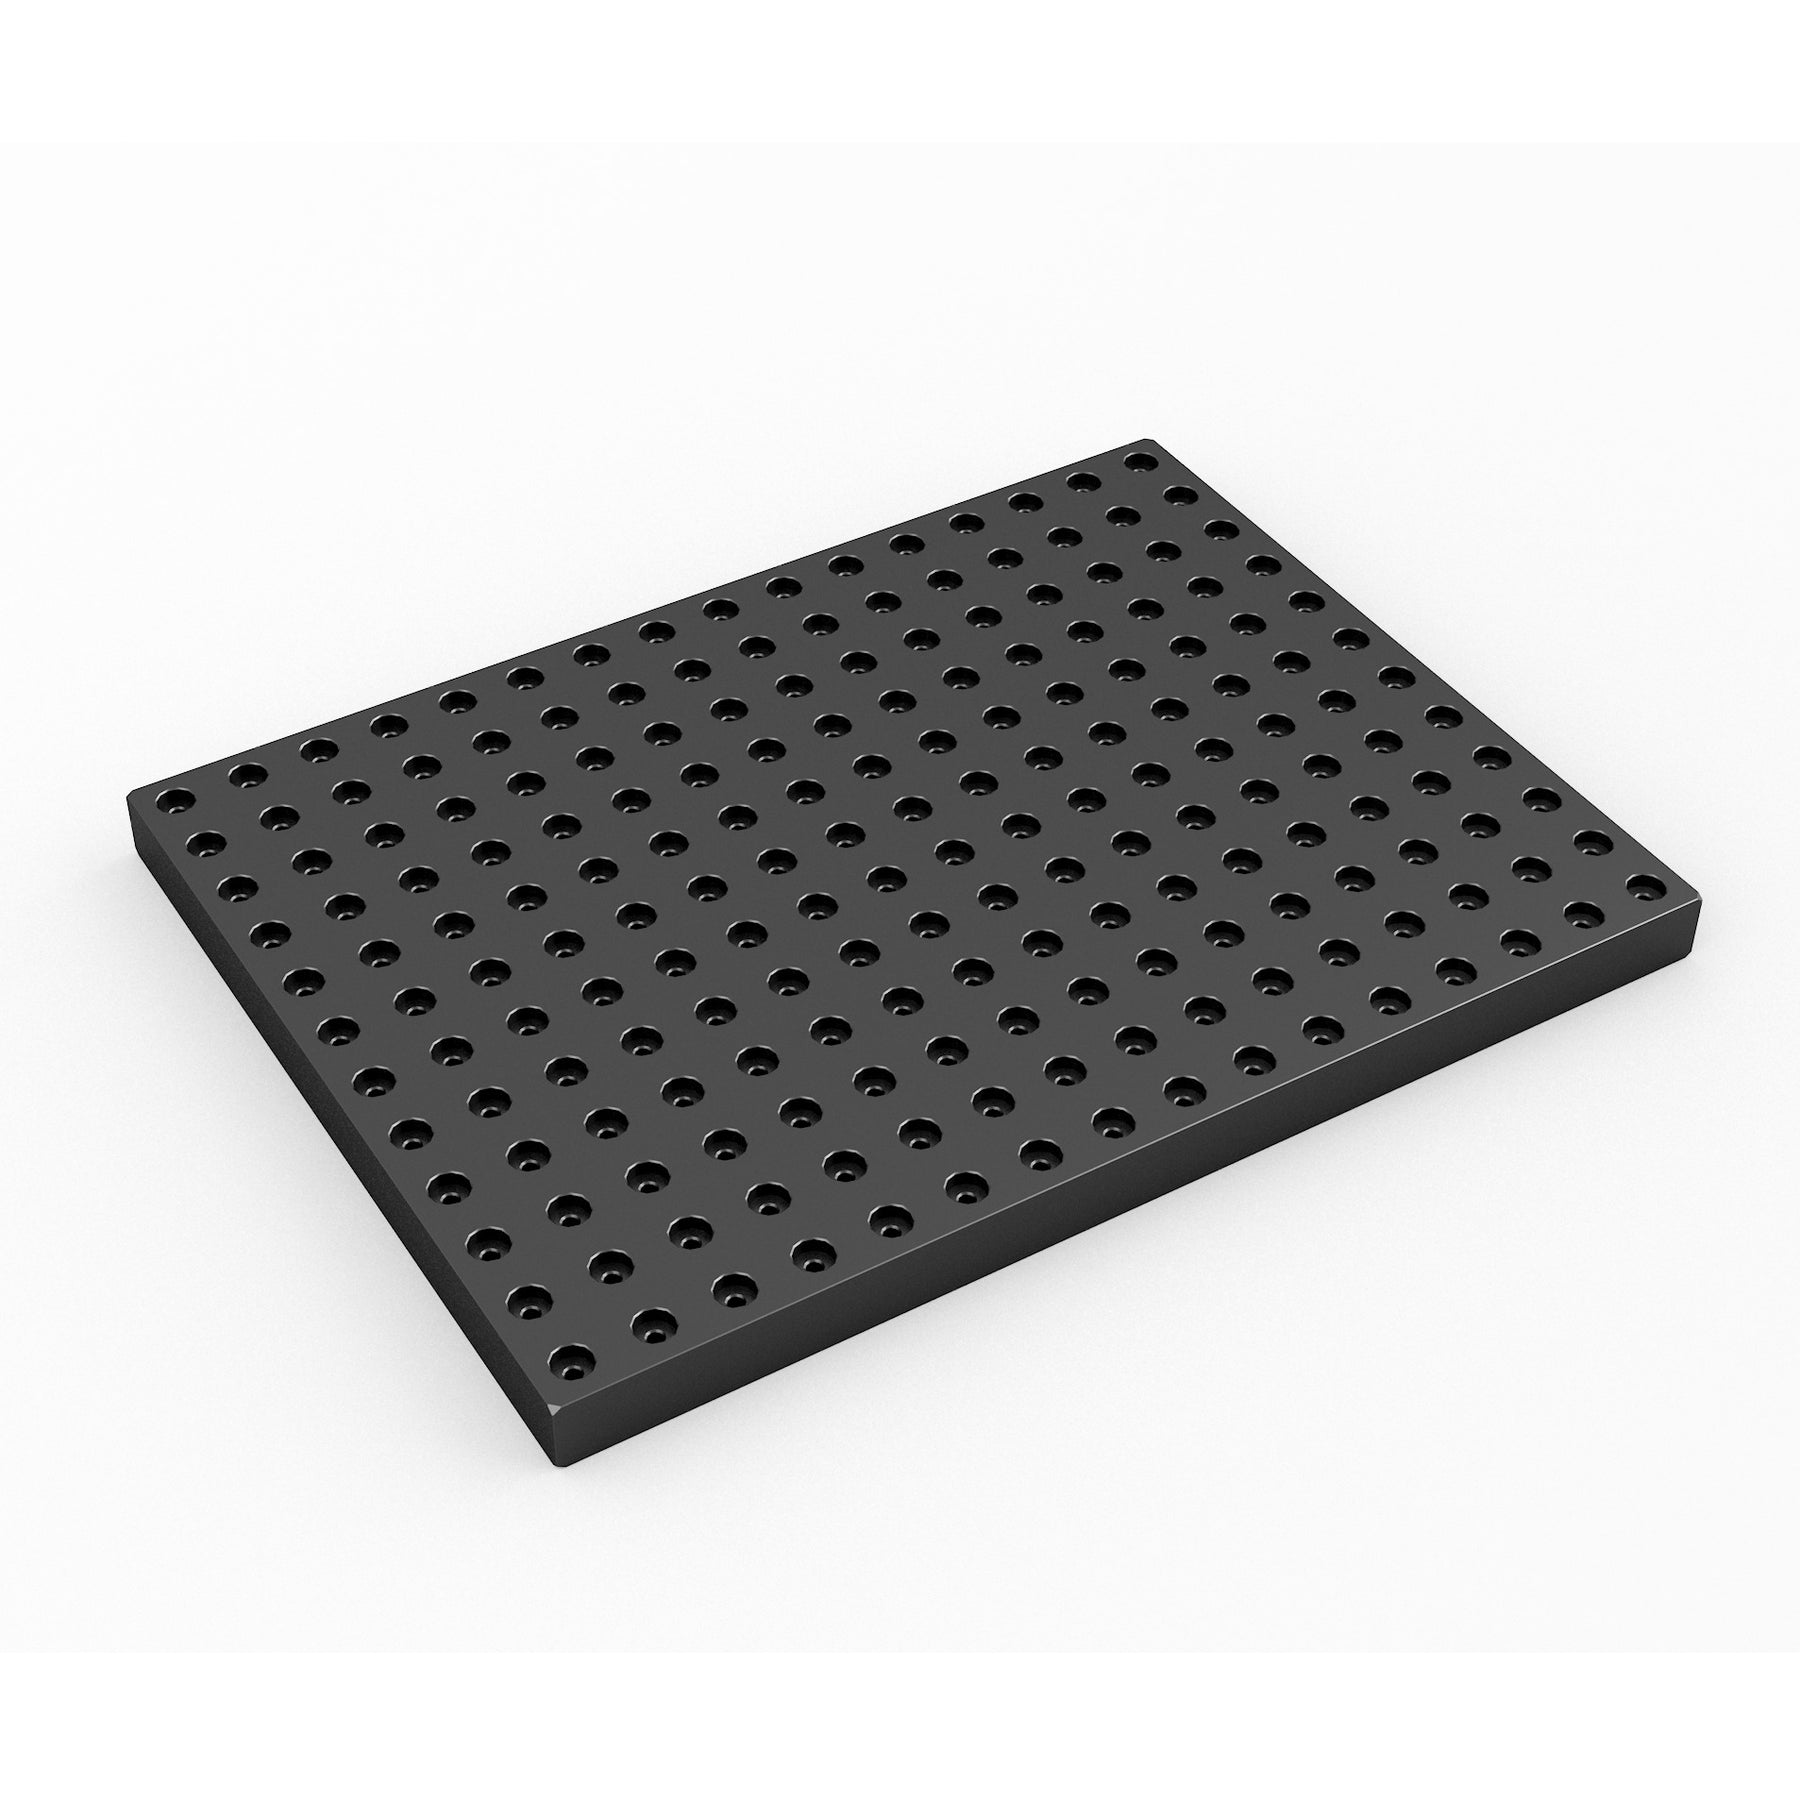 CMM Fixture Grid base plate 20x300x600mm